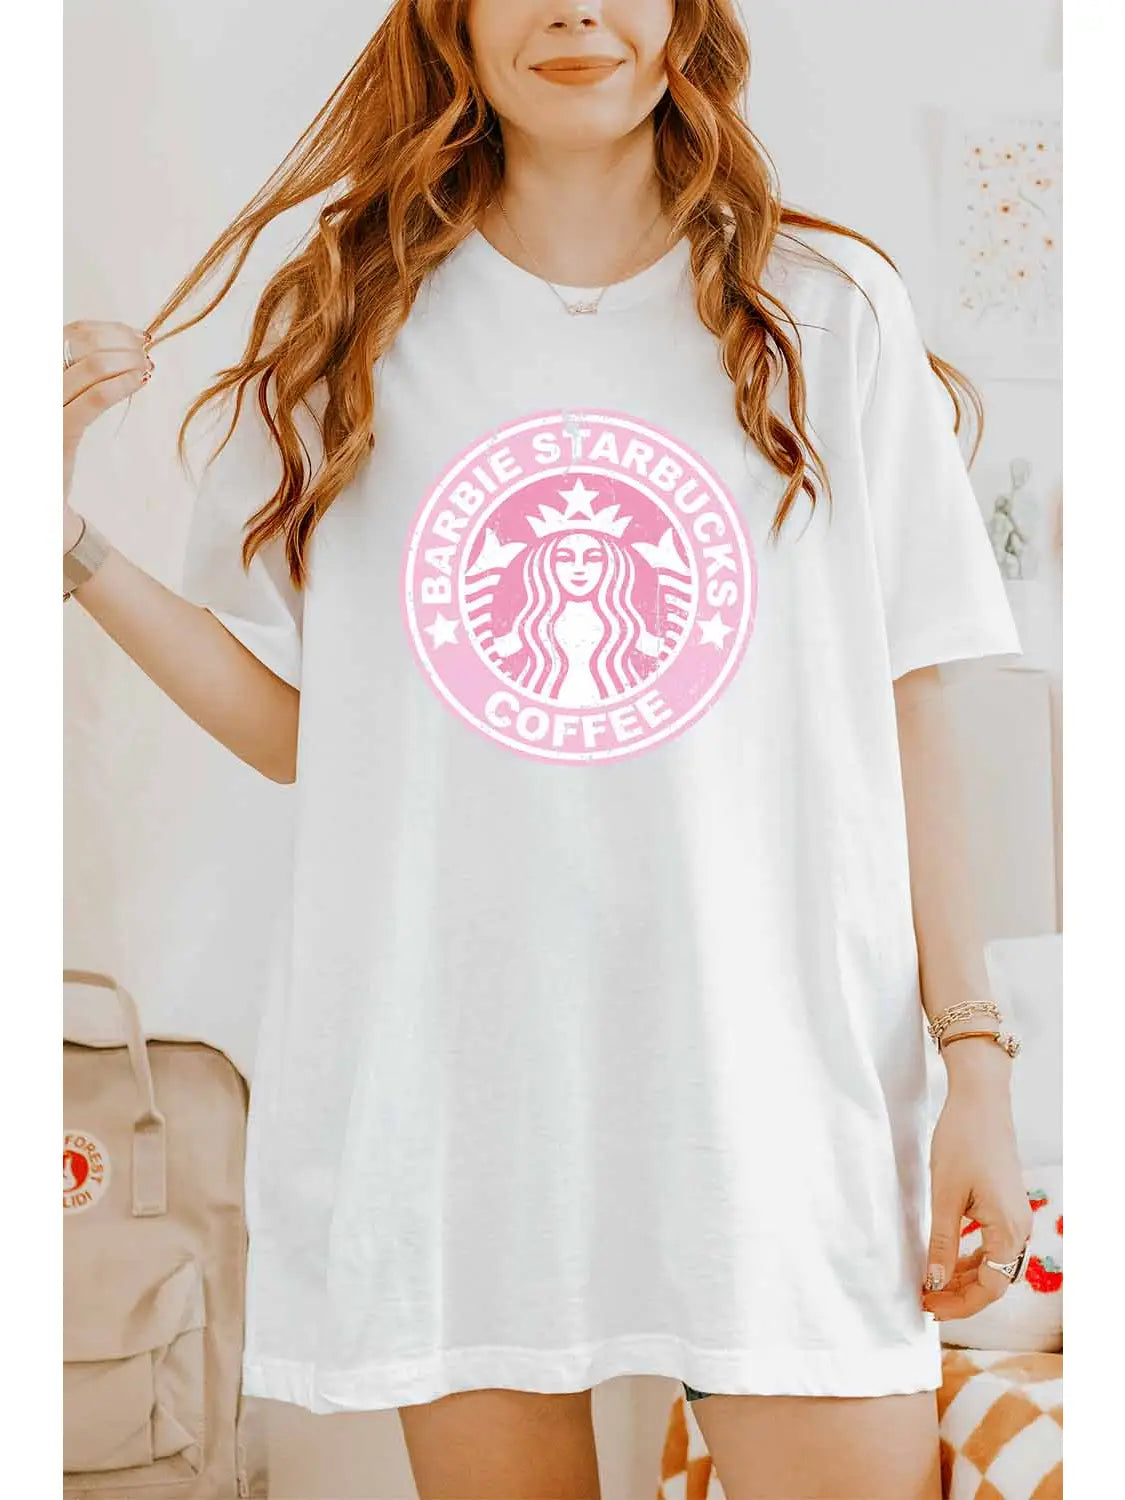 T-shirt Barbie - Starbucks coffee